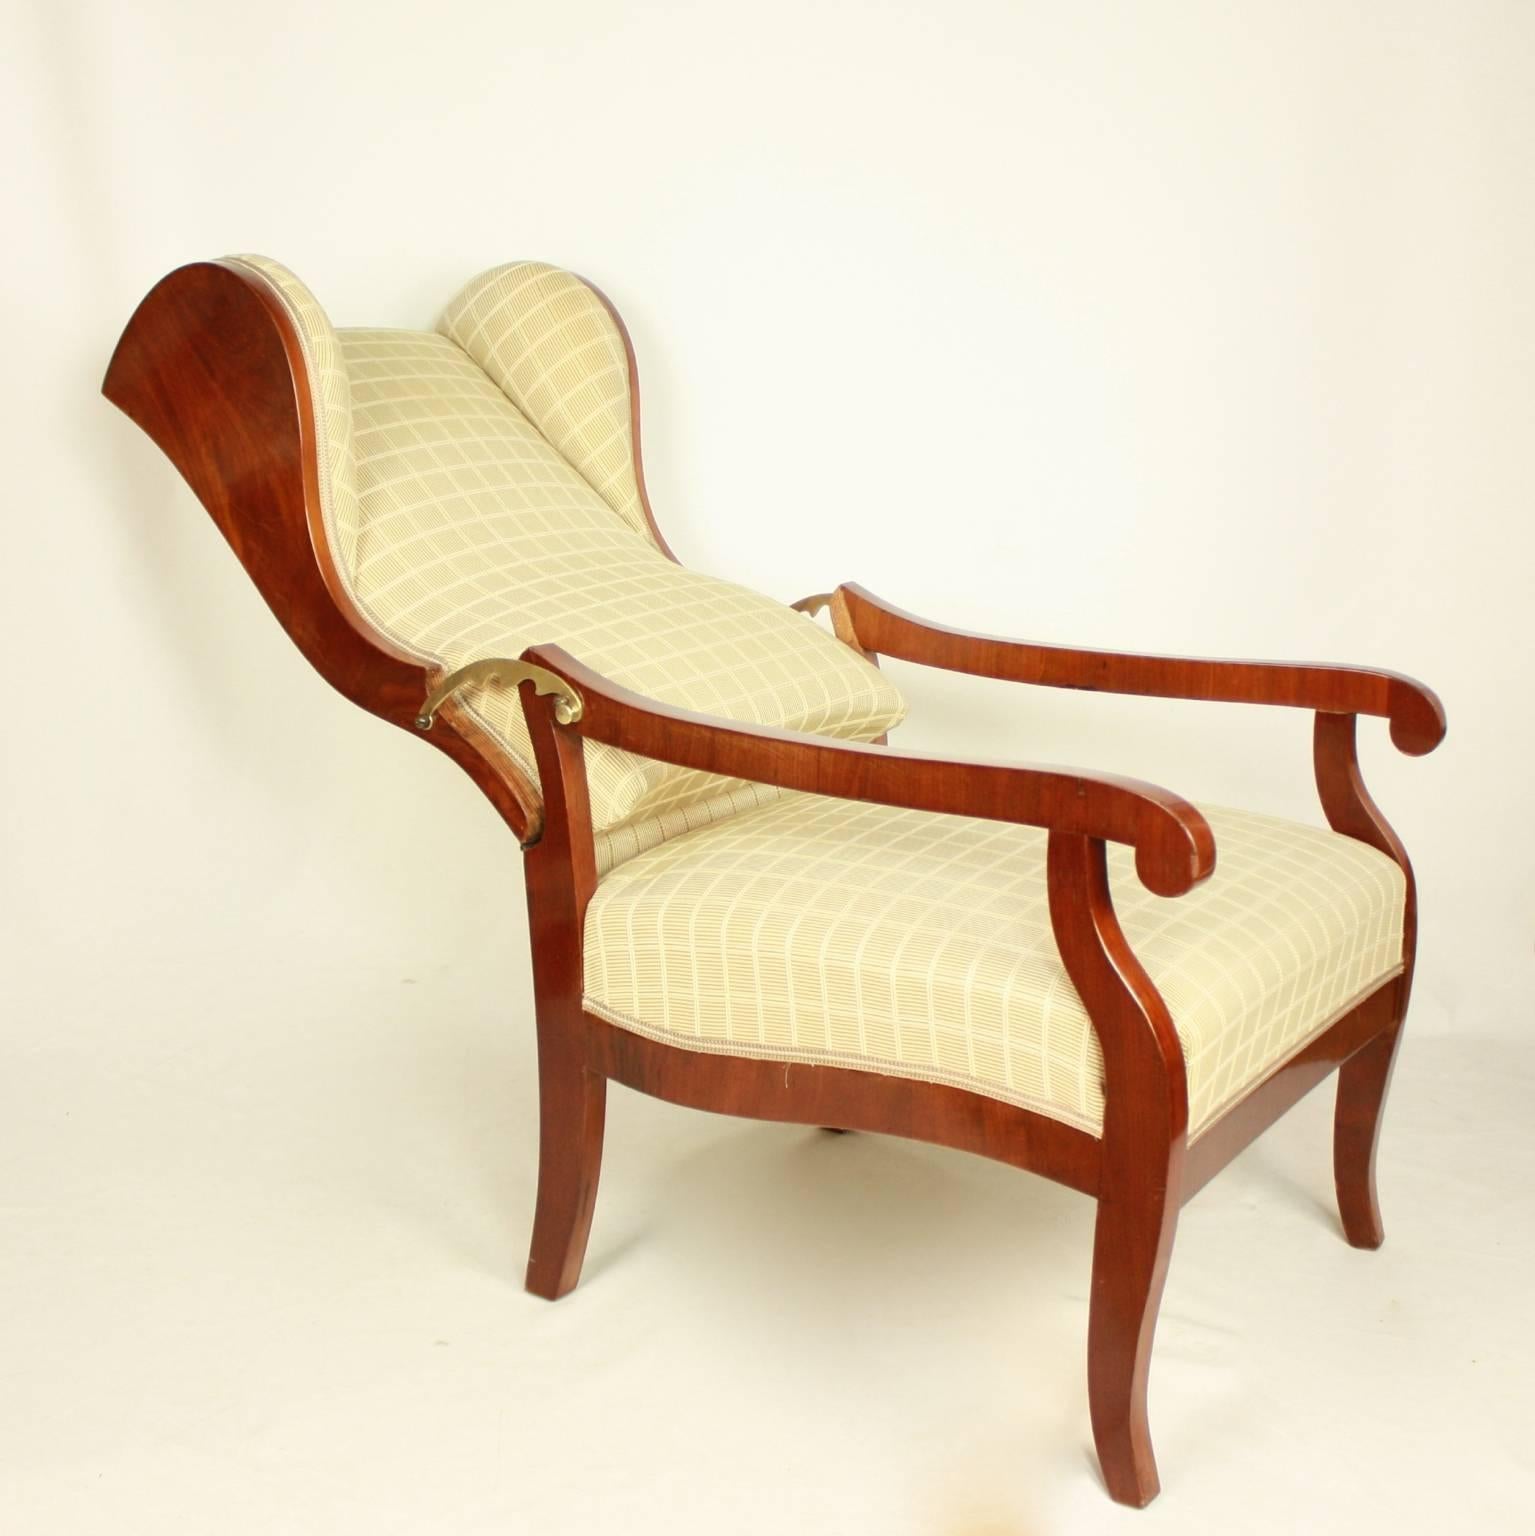 German Large Biedermeier Declining Wing Chair, circa 1820